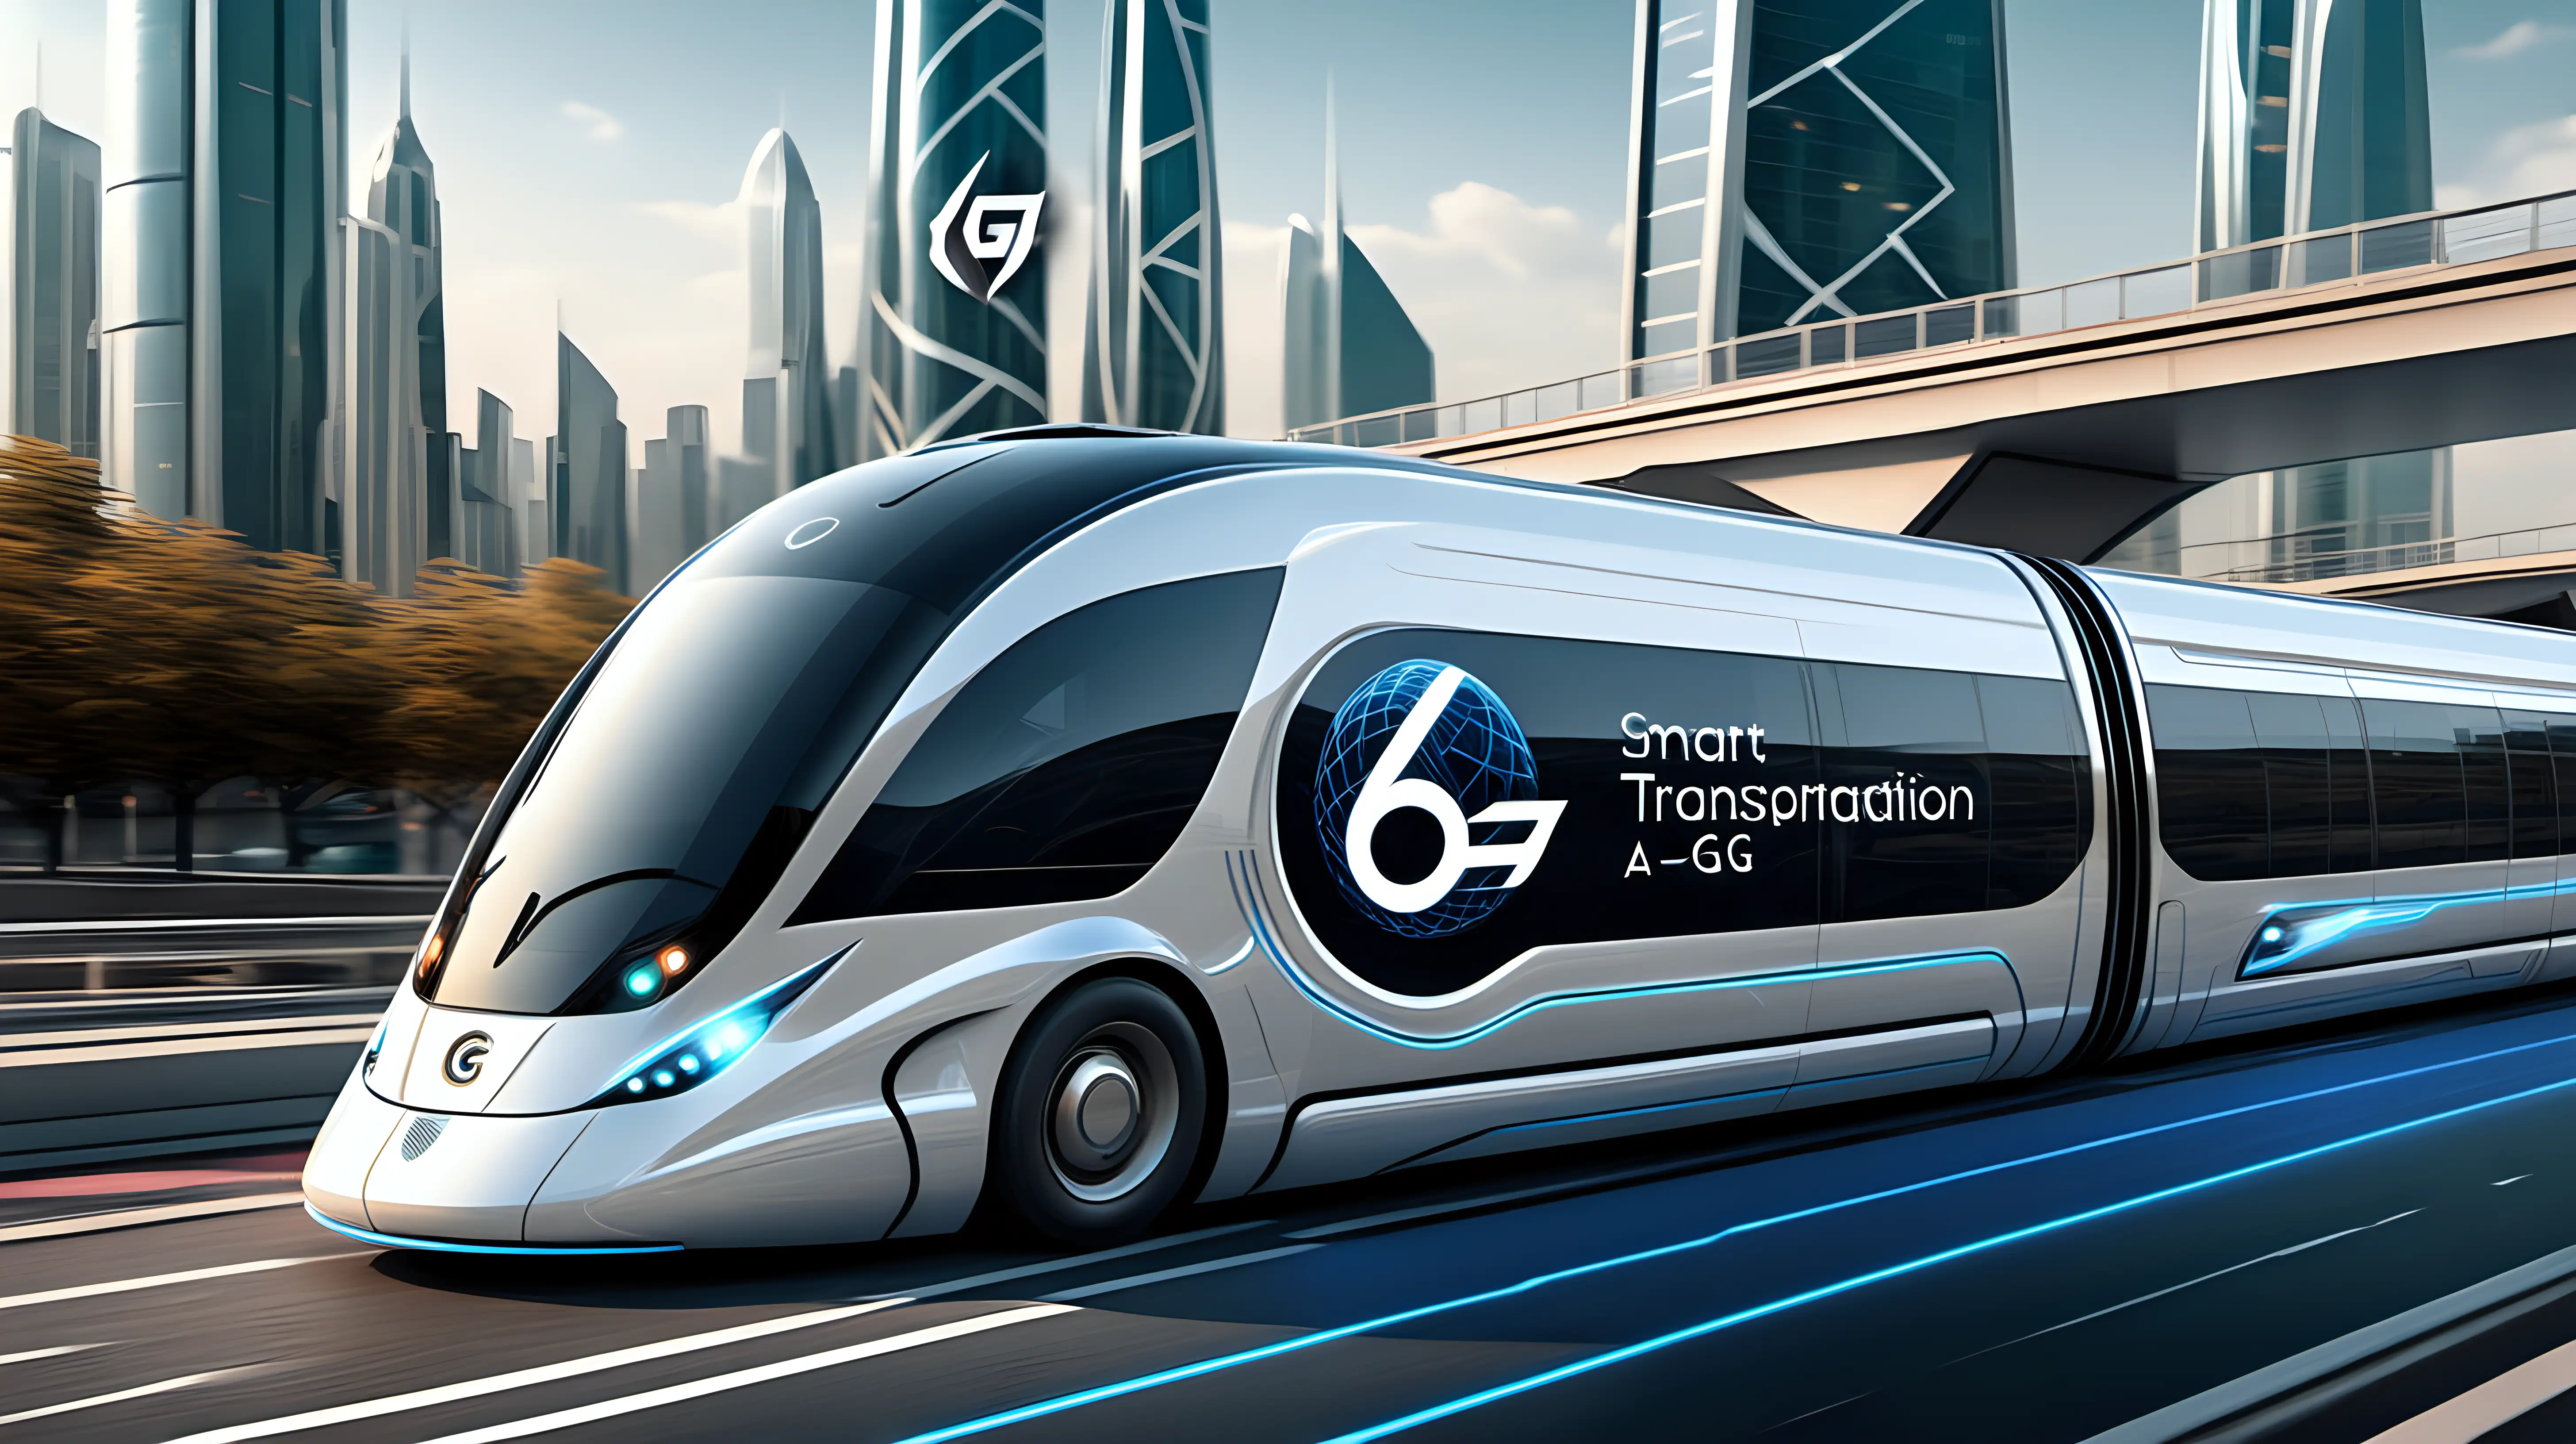 Futuristic 6GEnabled Transportation System Logo Displayed on Vehicles